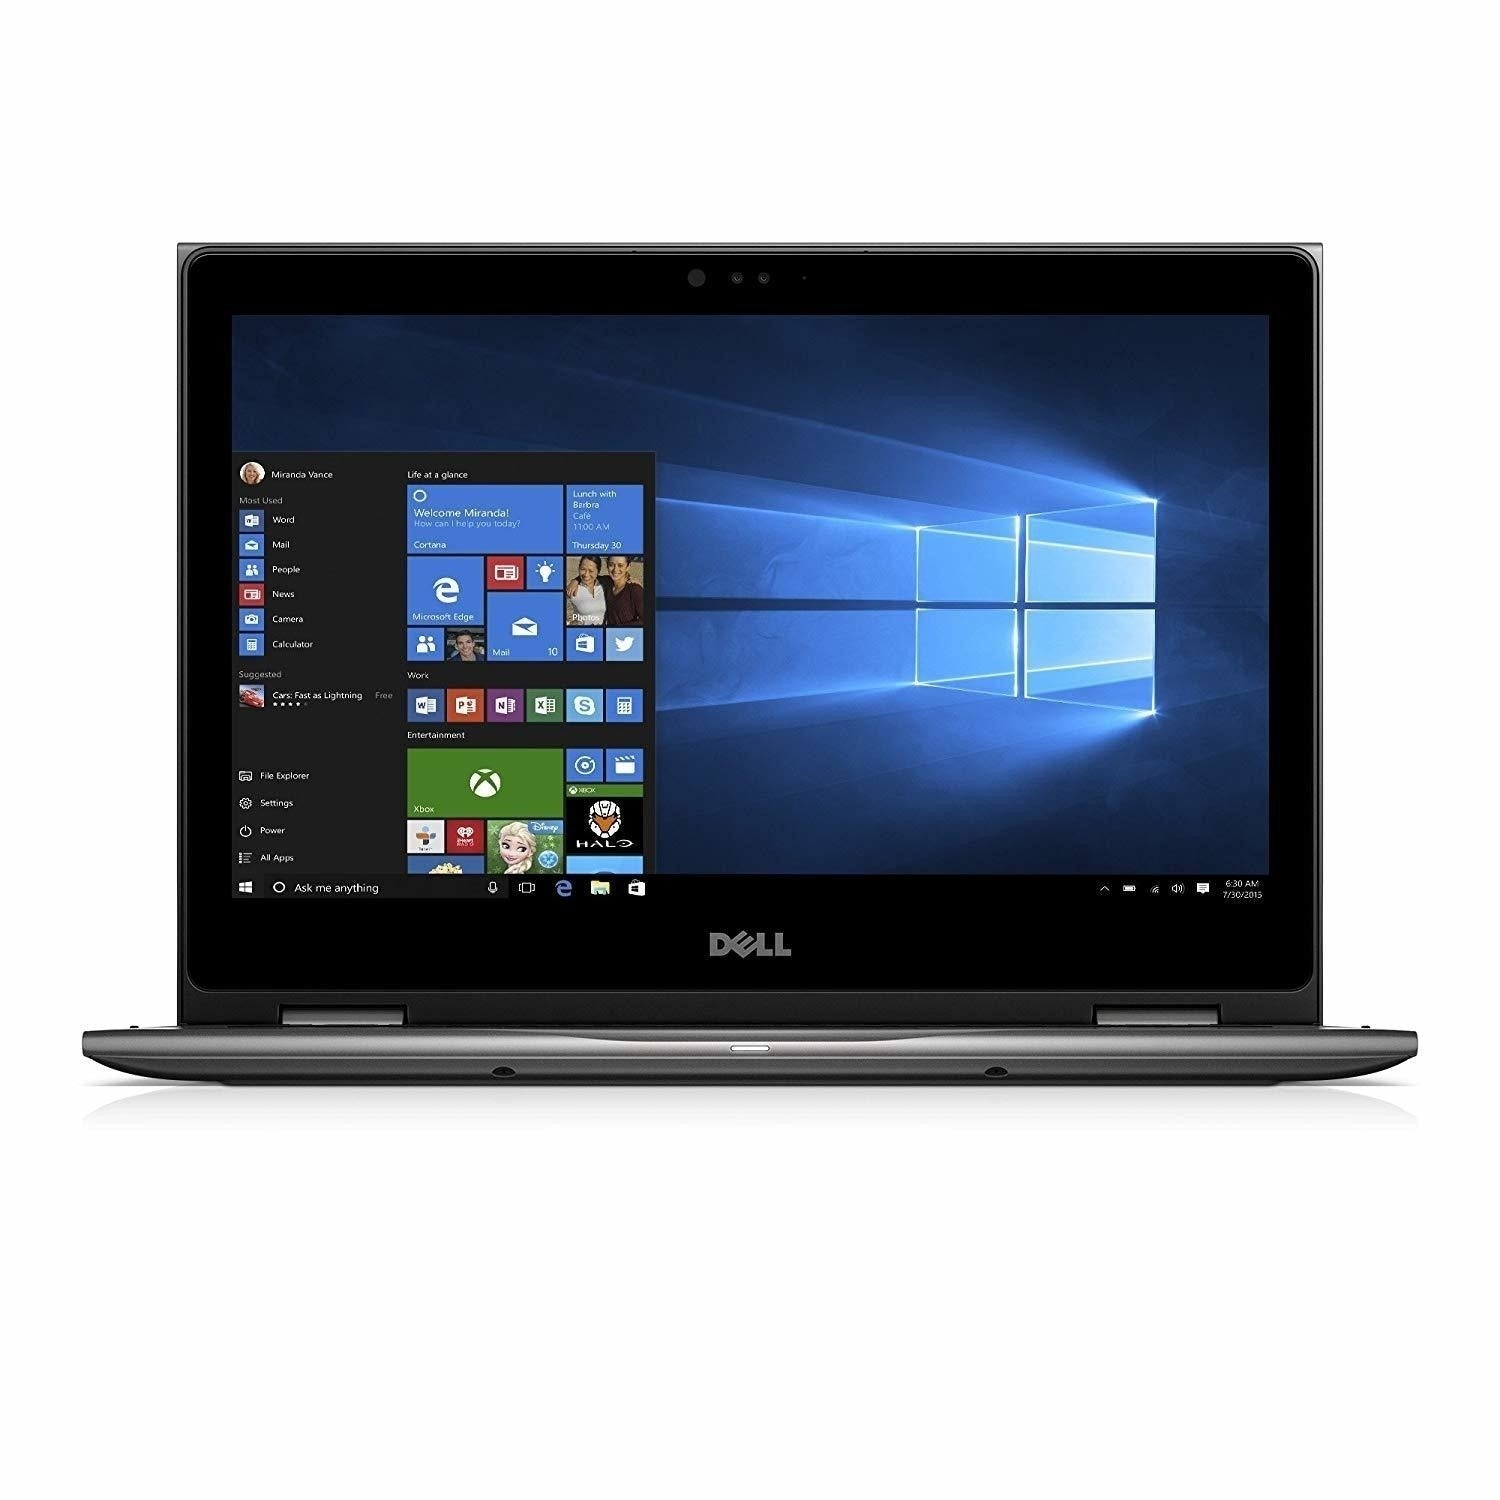 Dell Inspiron 13 5378 Laptop, Intel Core i7-7500U, 8GB RAM, 256GB SSD, 13.3”, Silver - Refurbished Good